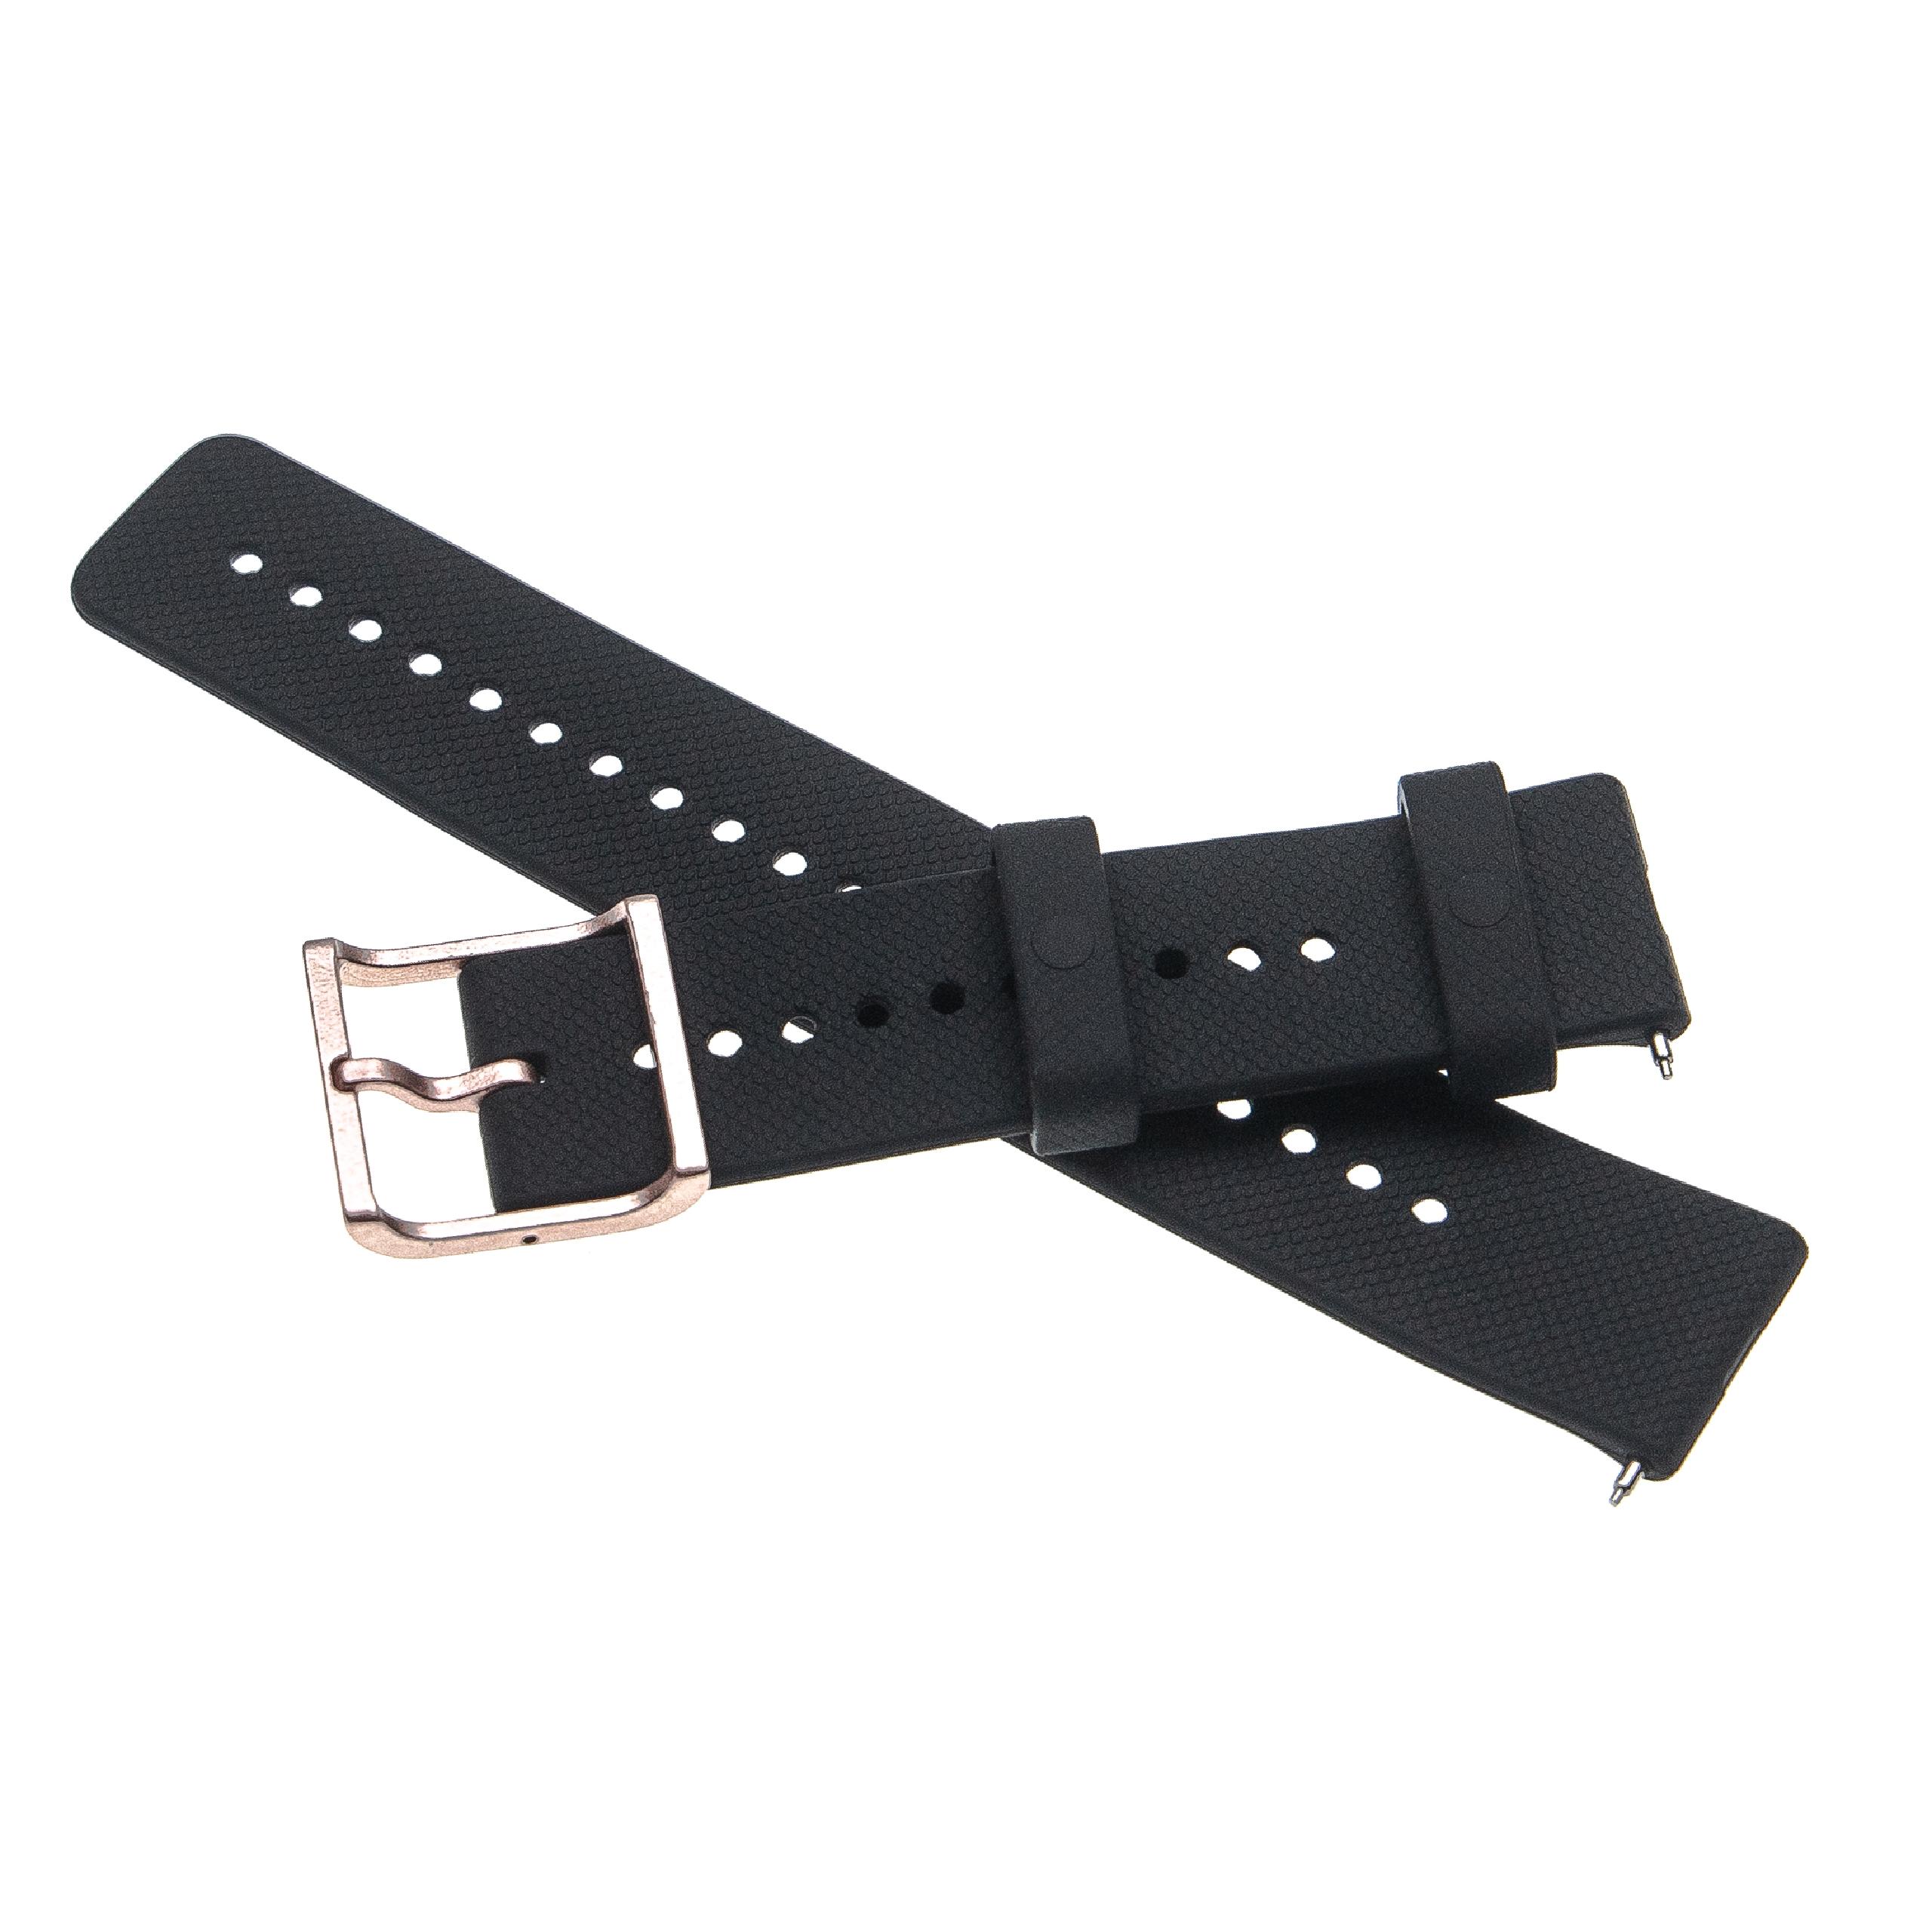 Armband für Polar Smartwatch - 12,8 + 9,1 cm lang, 20mm breit, Silikon, schwarz, rosa-metallic